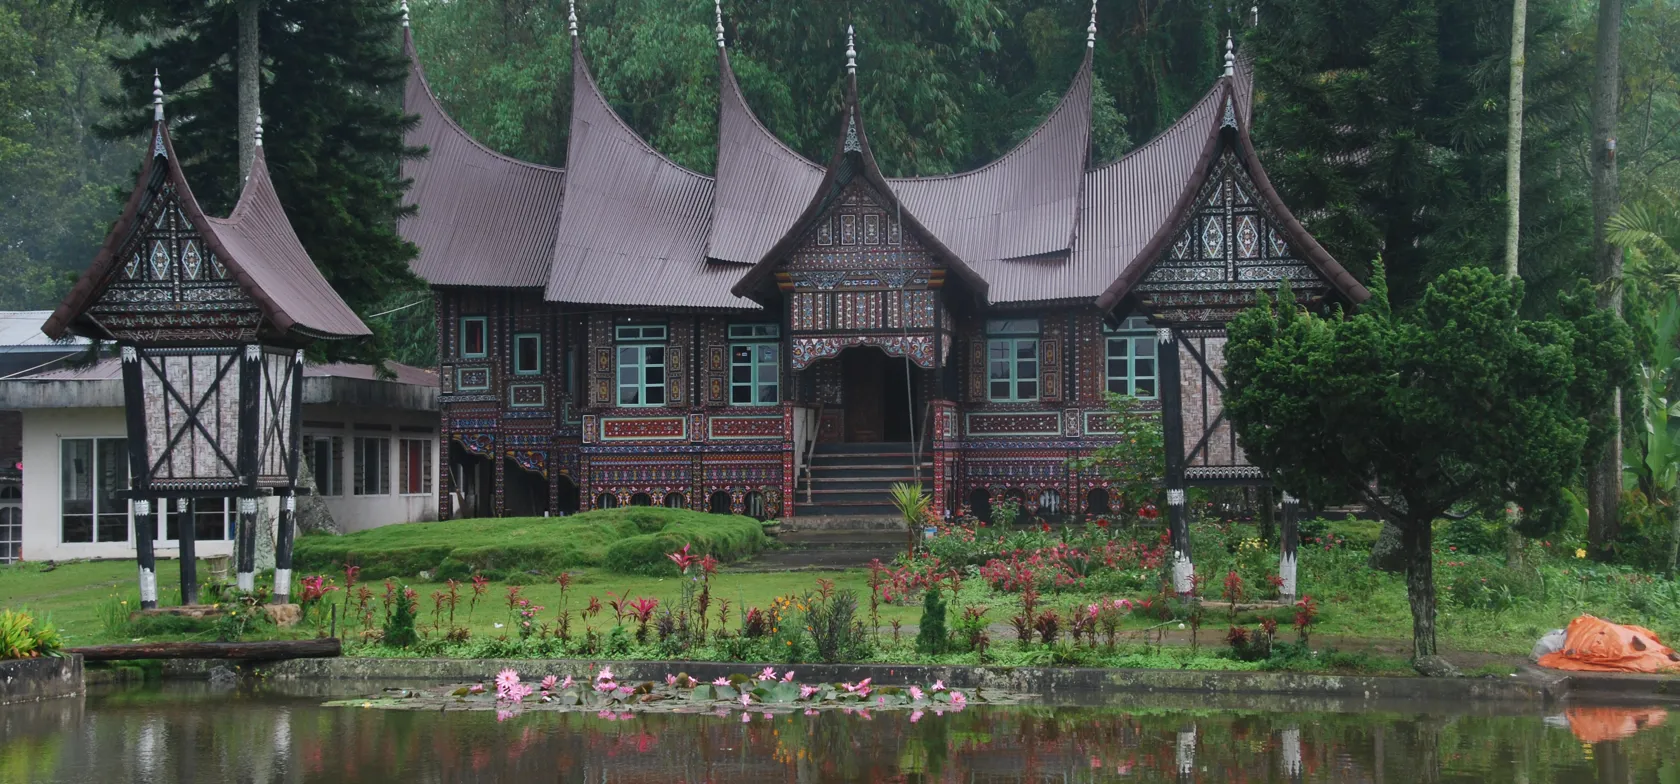 Byggestilen med sylespidse tage er særlig for byen Bukittinggi. Foto Jesper Bidstrup